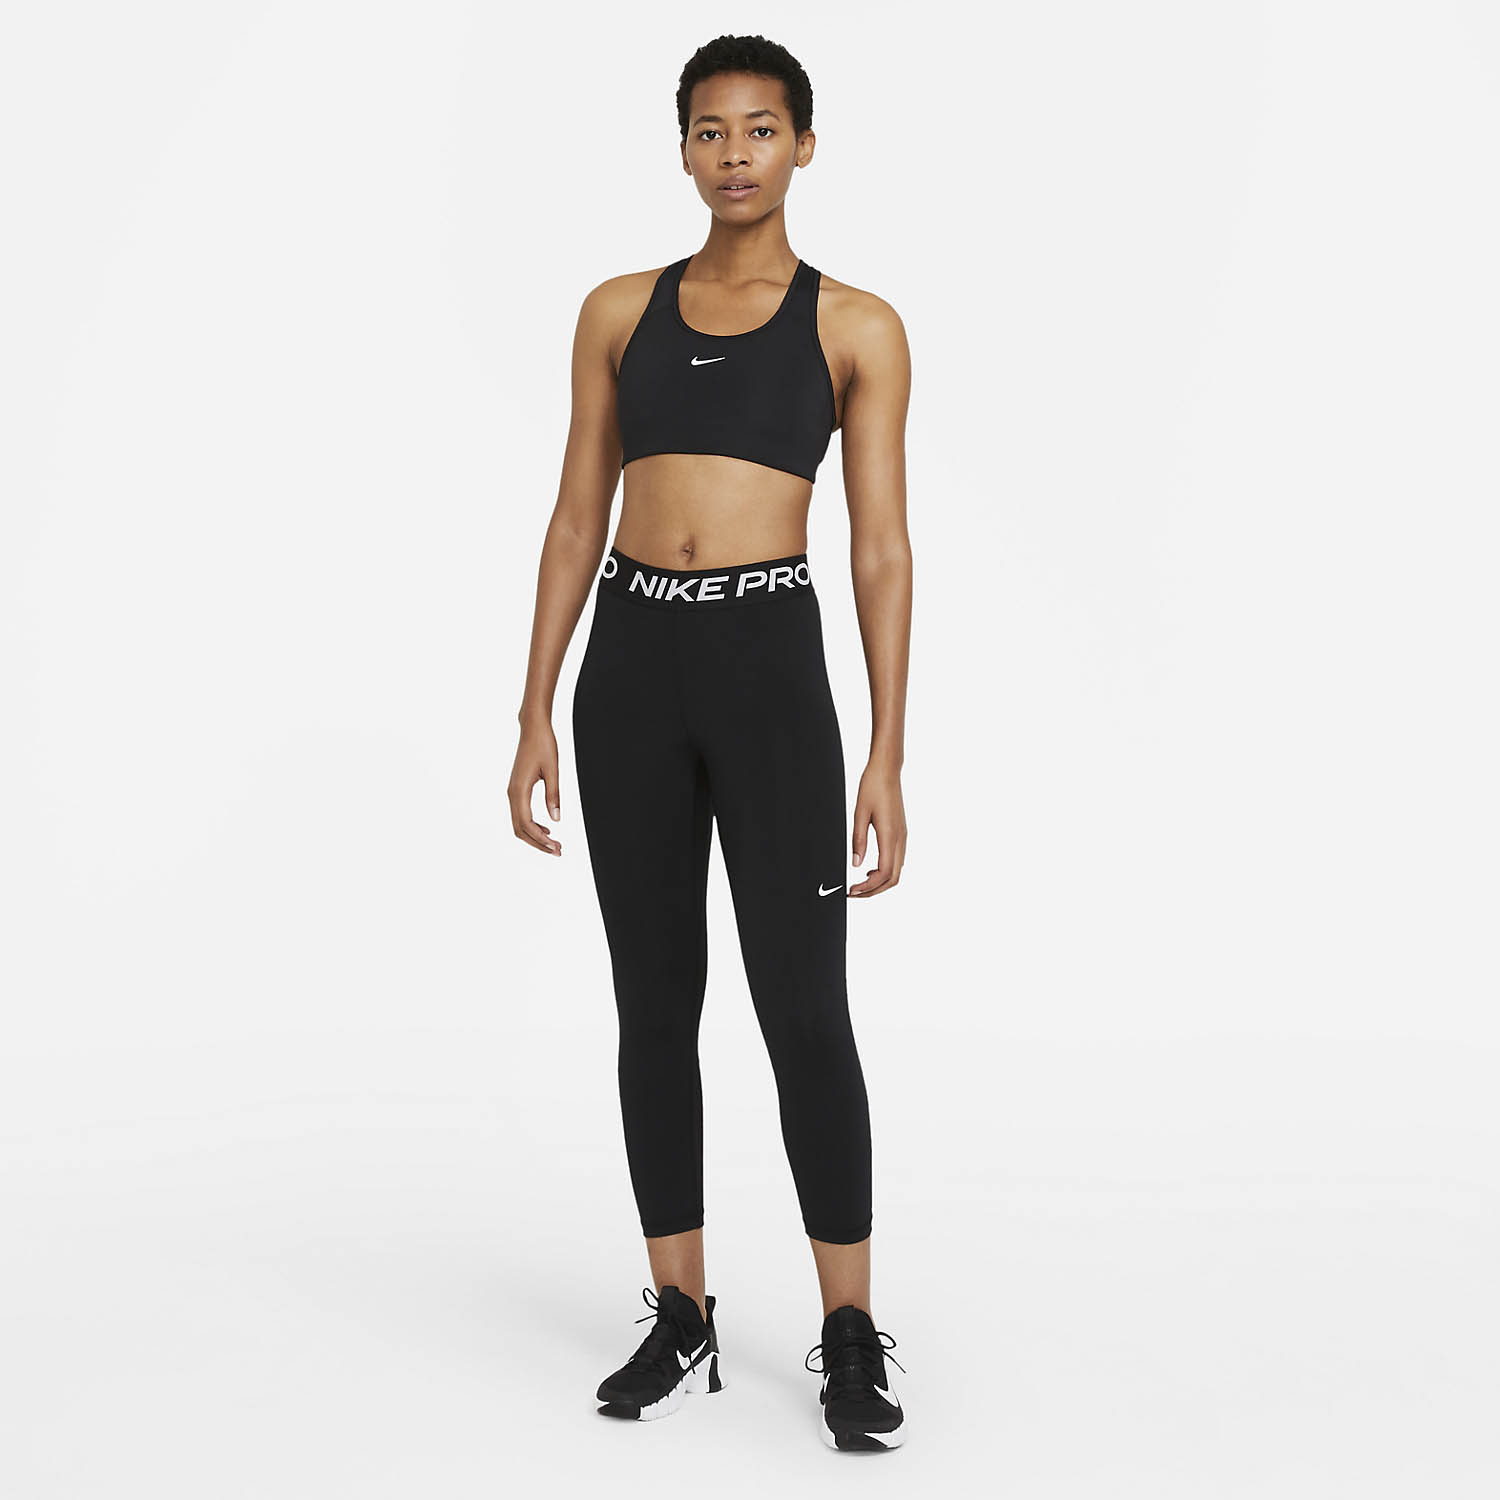 Nike Pro 365 Logo Women's Tennis Tights - Black/White